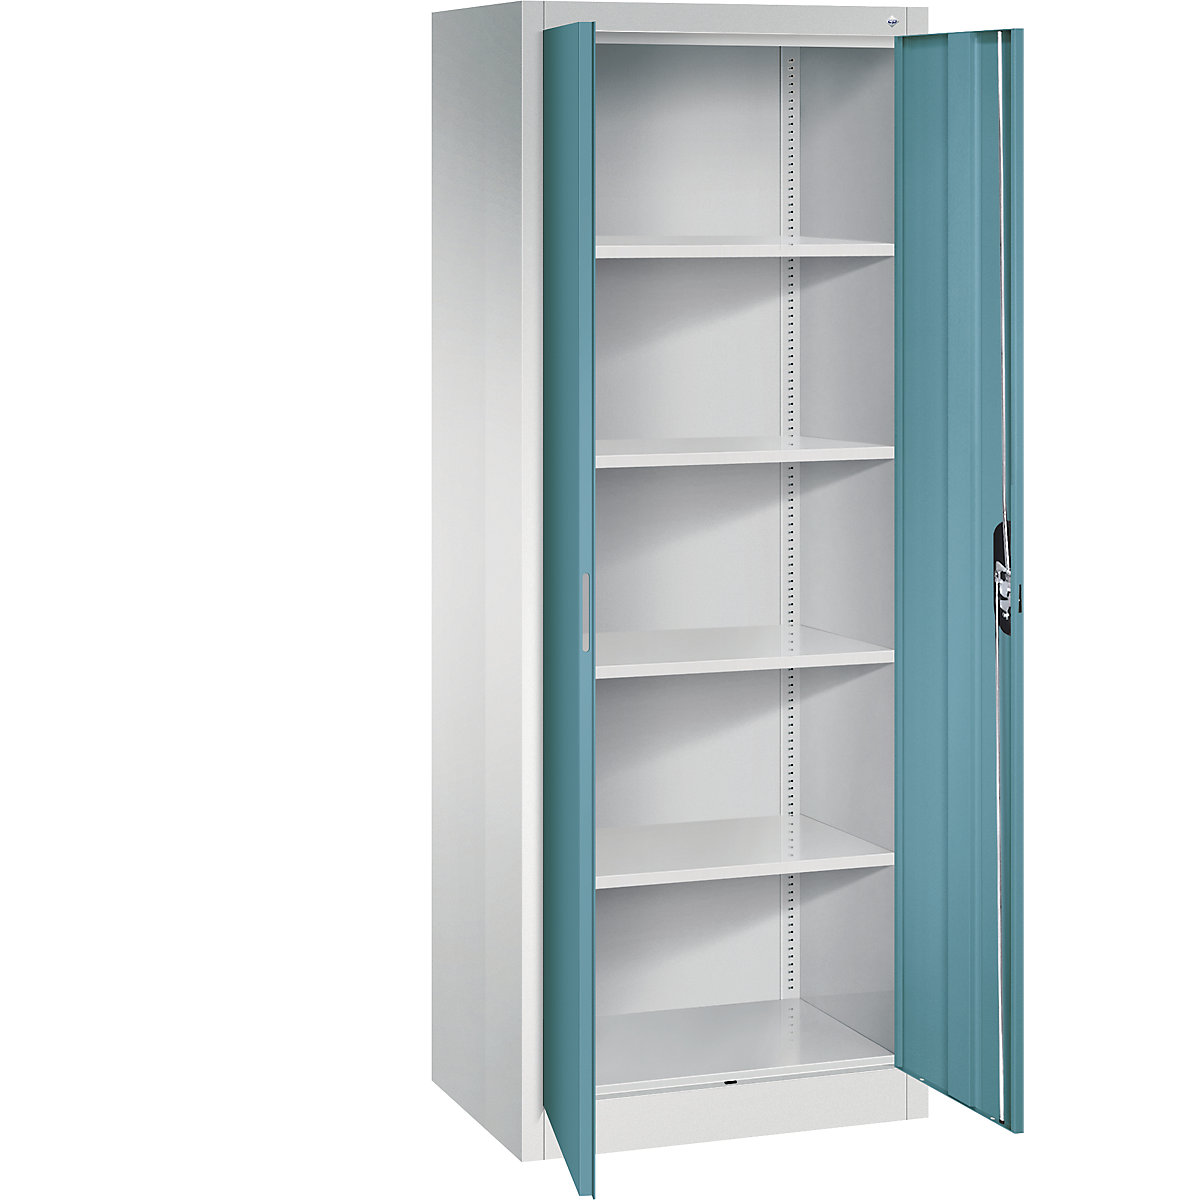 C+P – ACURADO universal cupboard, WxD 700 x 500 mm, light grey / water blue